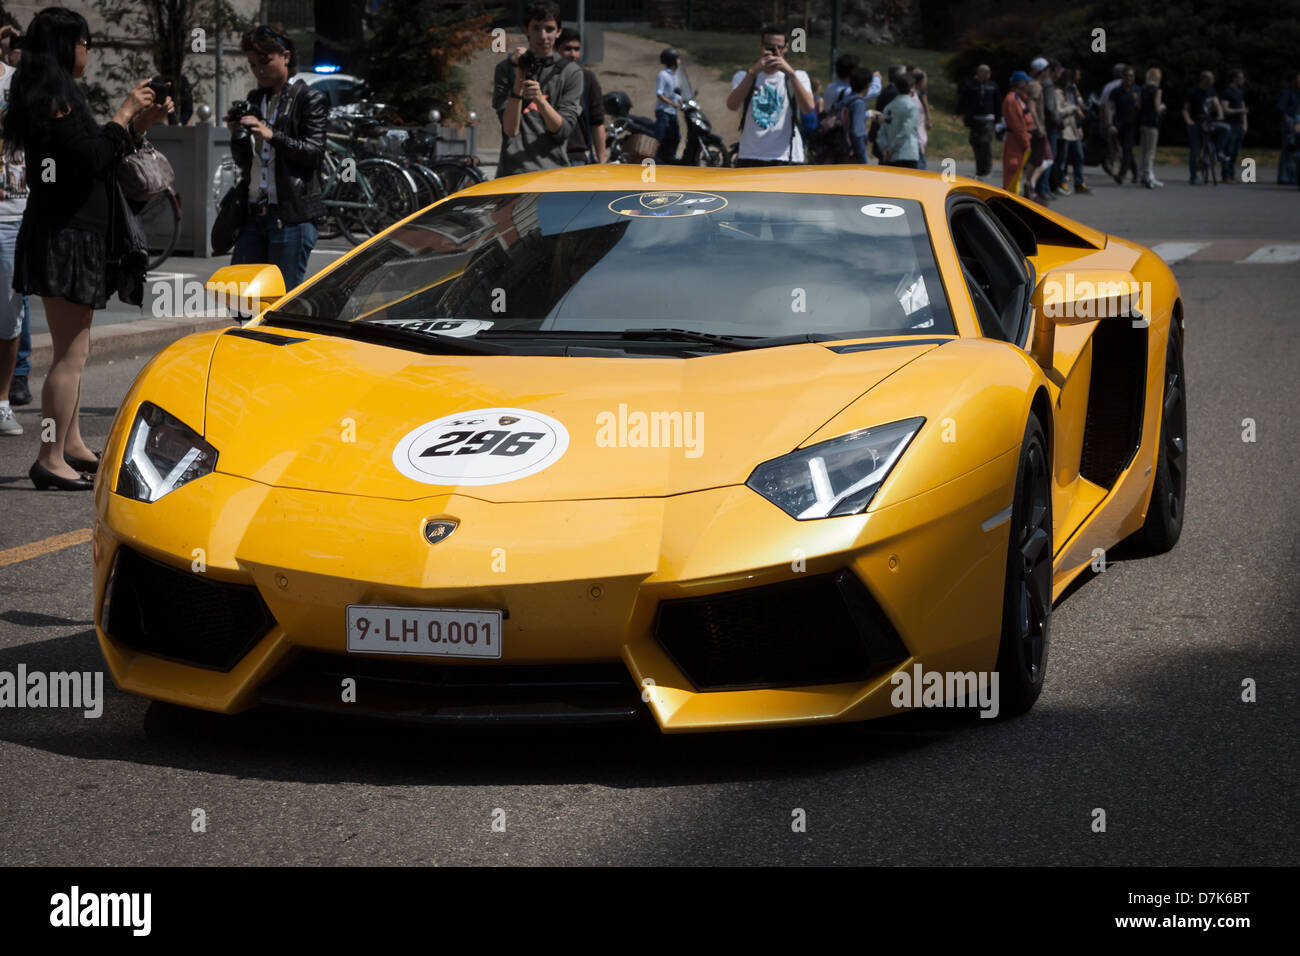 Milan, Italy - May 8, 2013: International Lamborghini fancy cars meeting in Milan Stock Photo